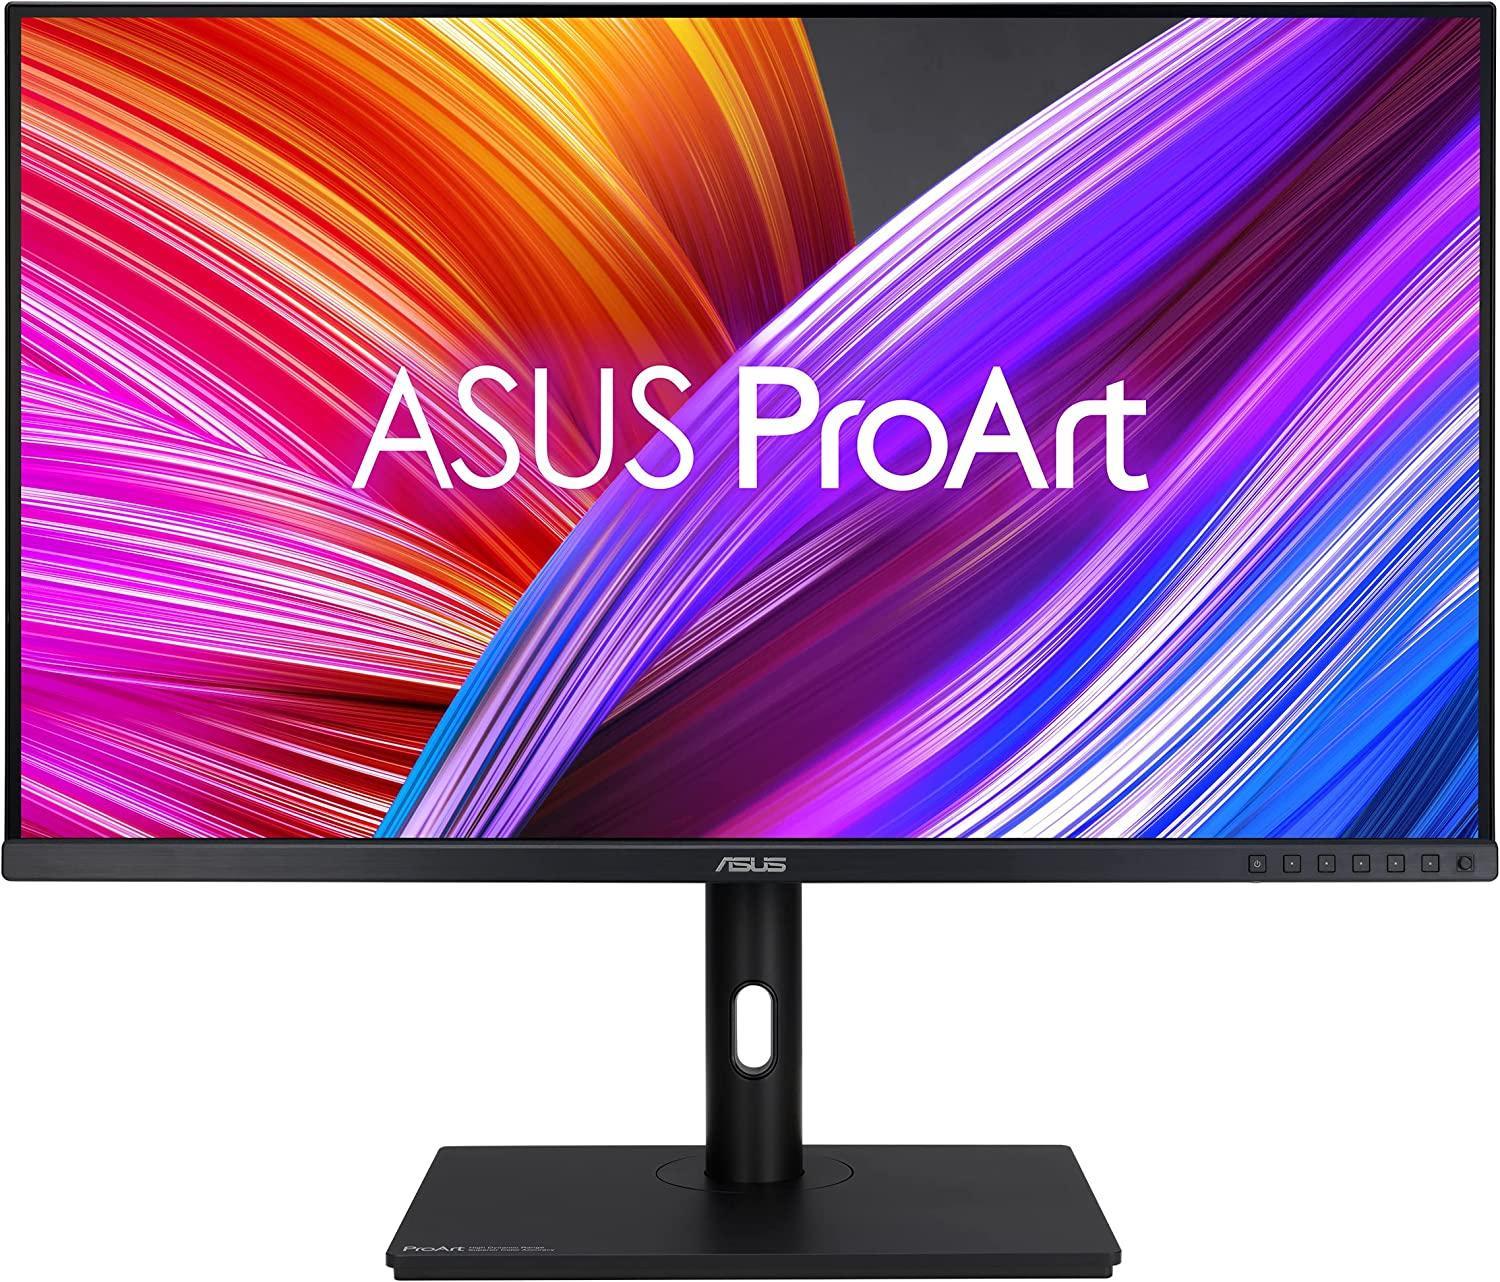 ASUS ProArt Display 31.5” 1440P Monitor (PA328QV) – IPS, QHD (2560 x 1440), 100% sRGB, 100% Rec.709, Color Accuracy ΔE < 2, Calman Verified, DisplayPort, HDMI, USB Hub, Height Adjustable,BLACK